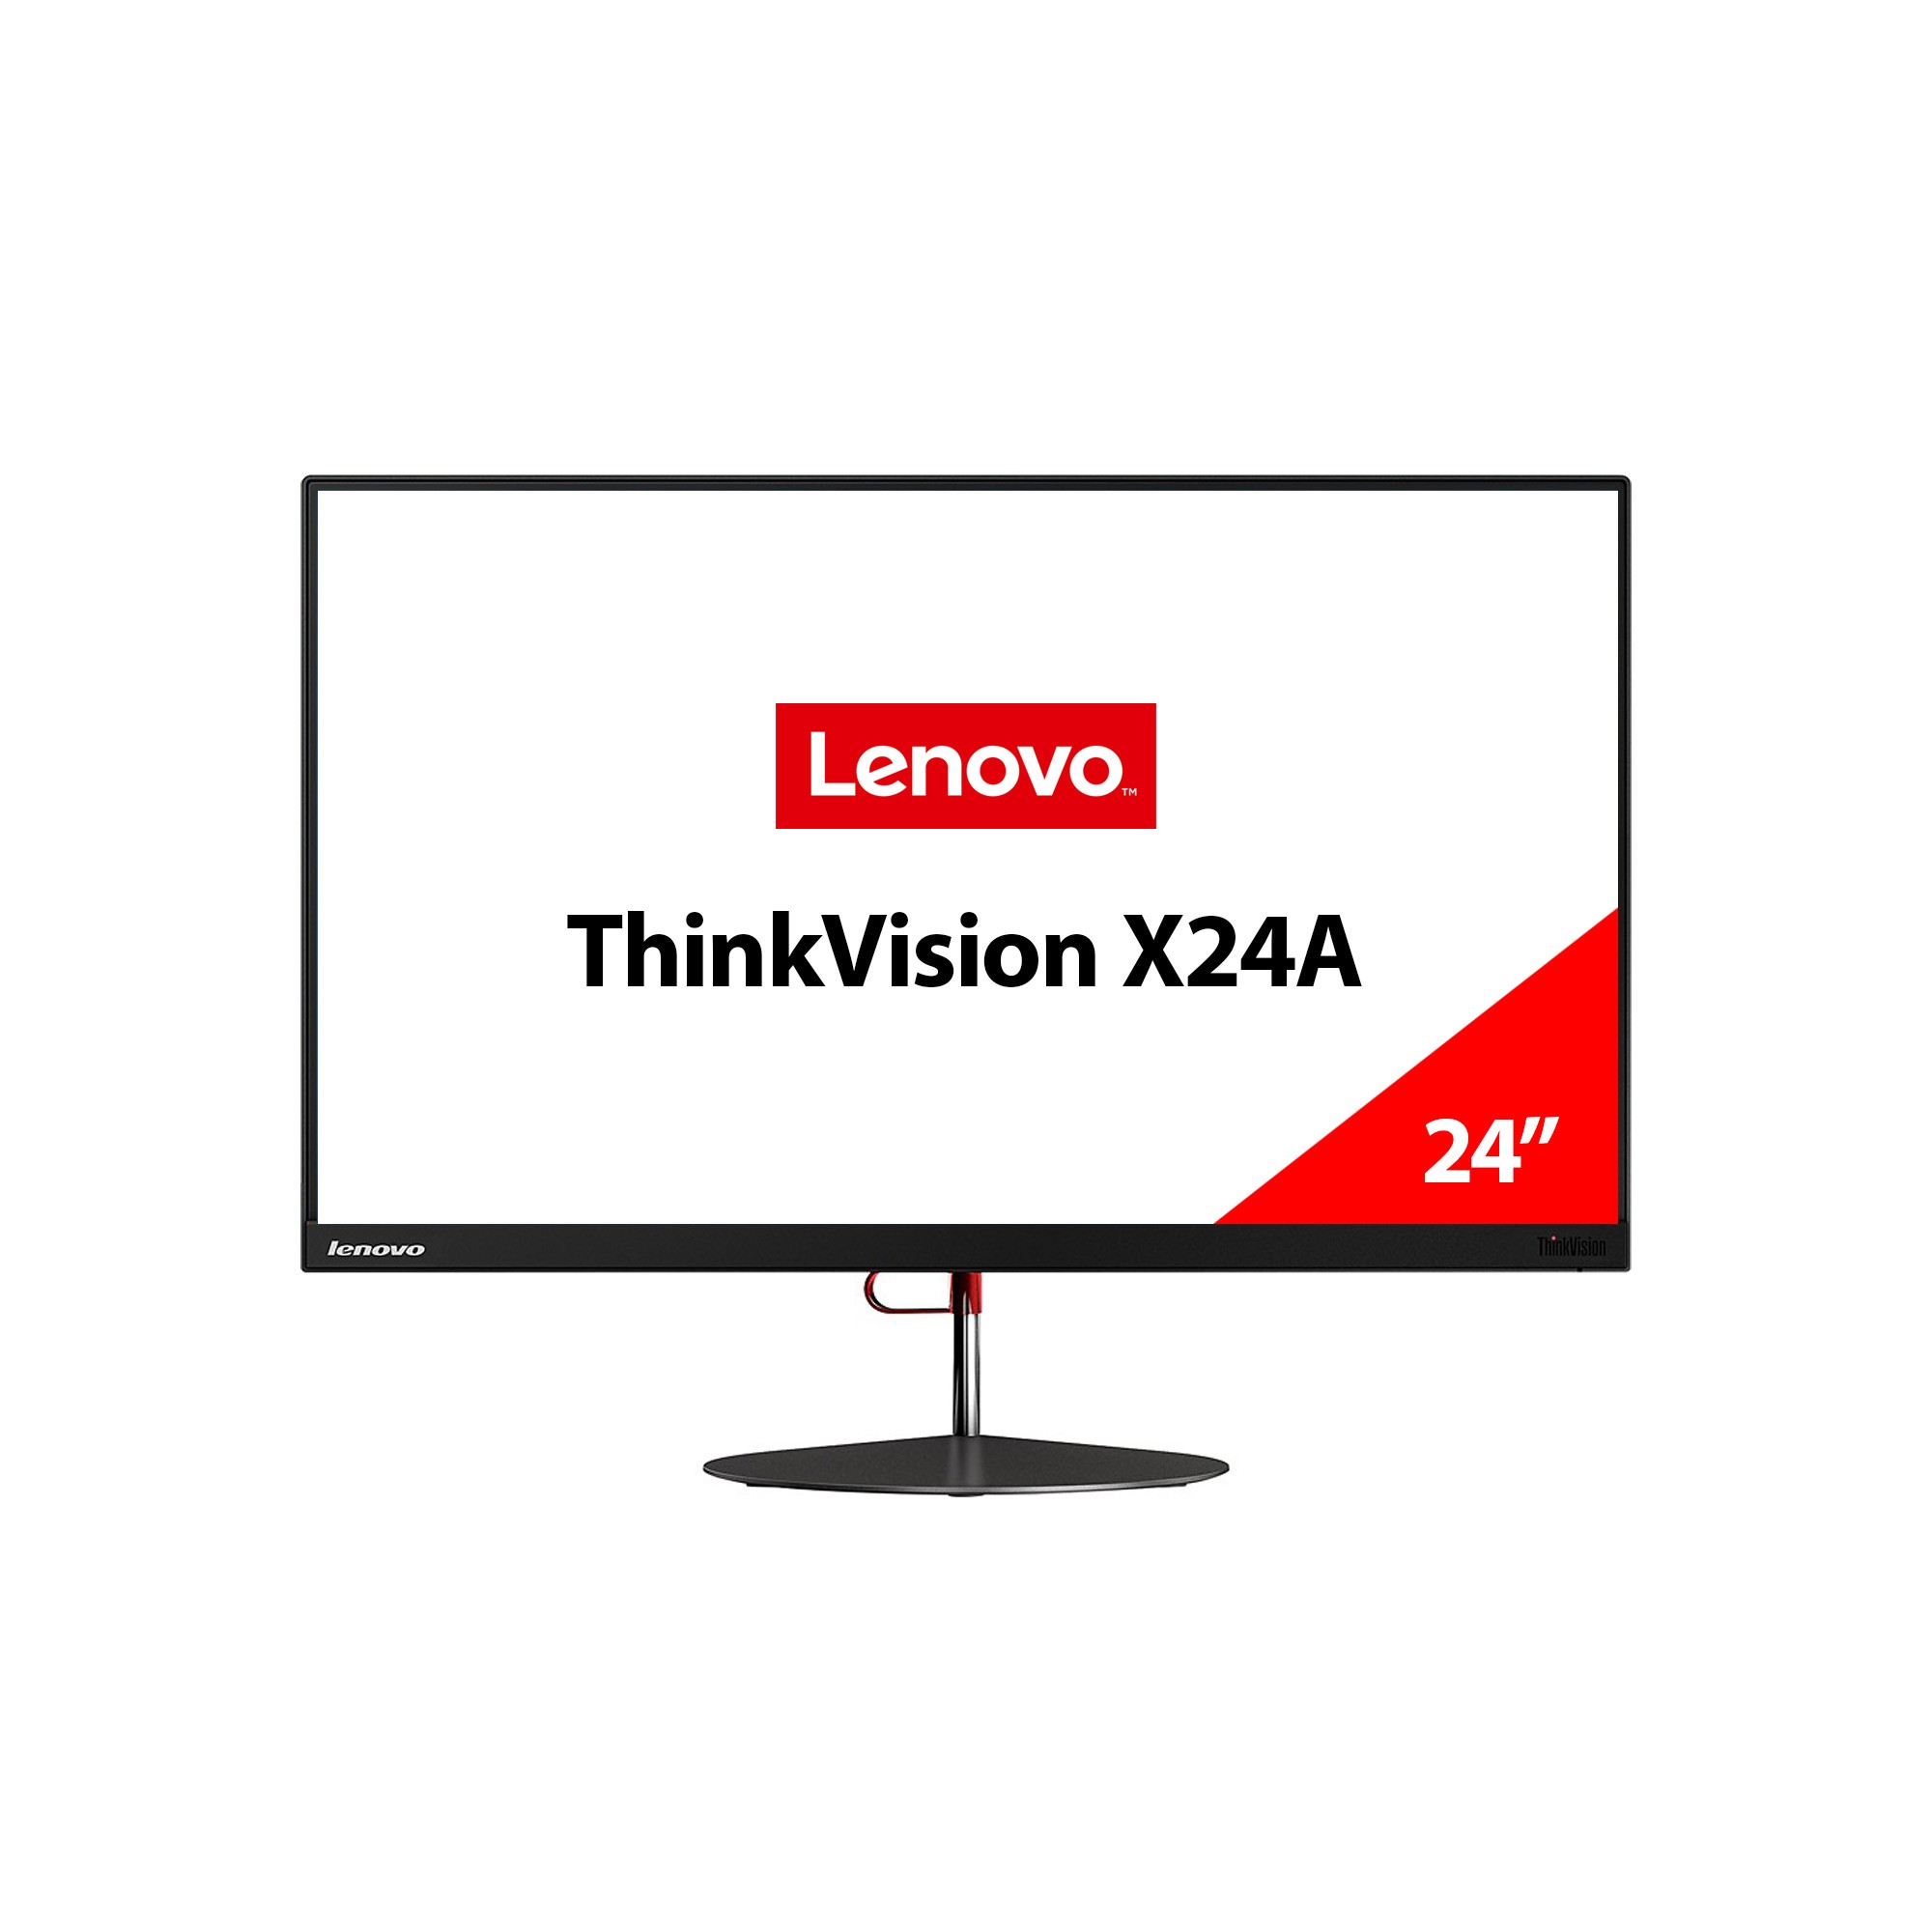 Think Vision X24A